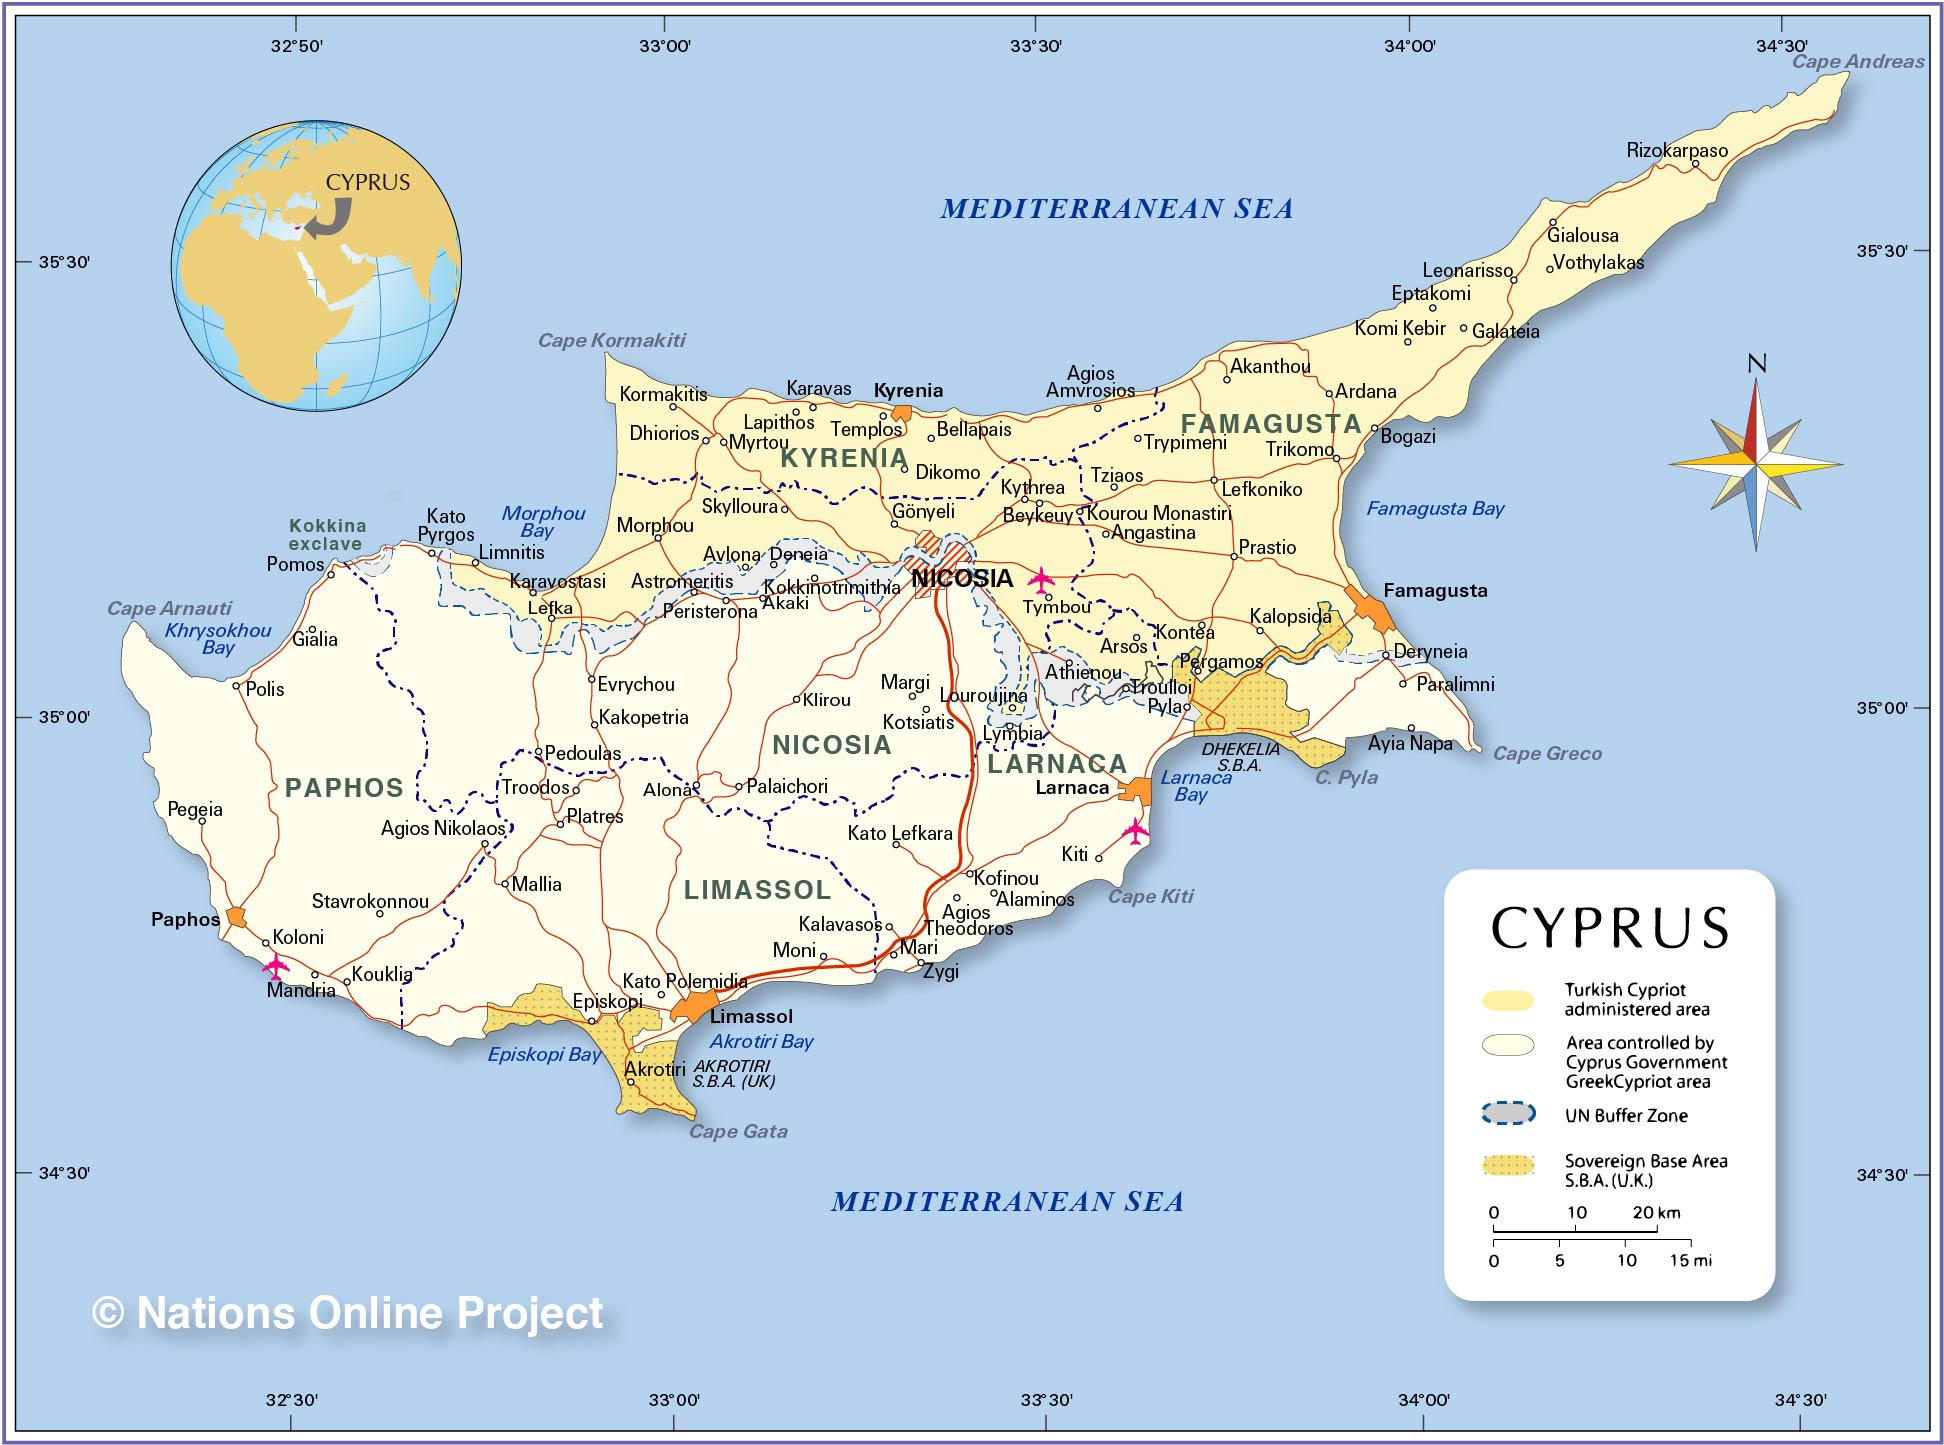 http://www.nationsonline.org/maps/cyprus_map.jpg